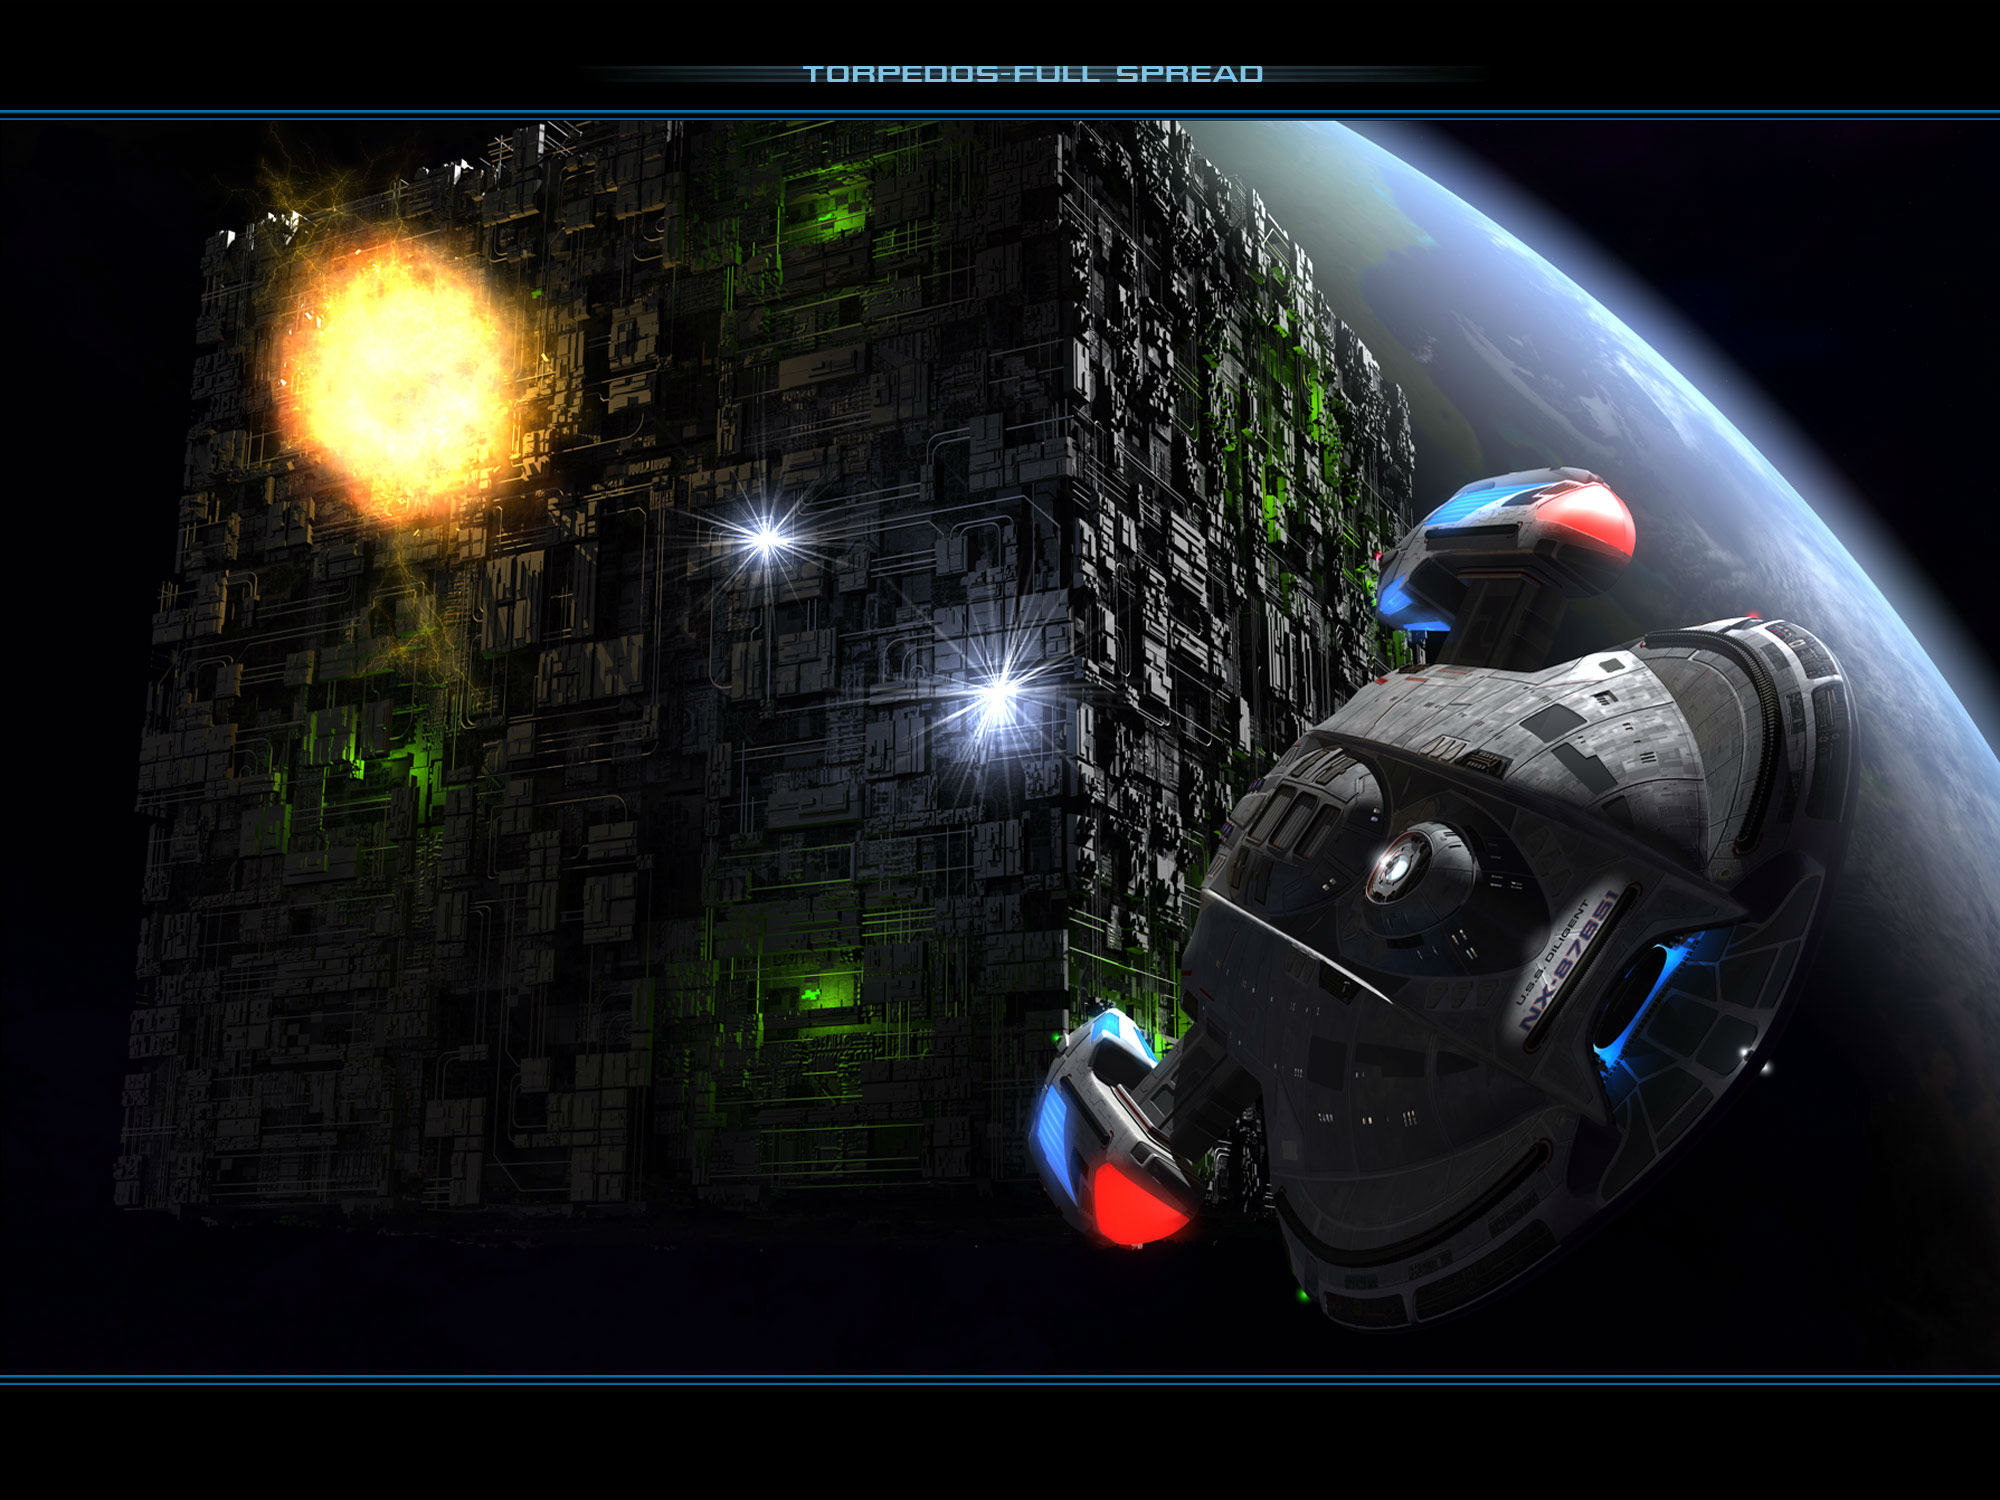 starship, Spaceship, Star, Trek, Borg, Sci, Fi, Movies, Video, Games, Battle, Spacecraft Wallpaper